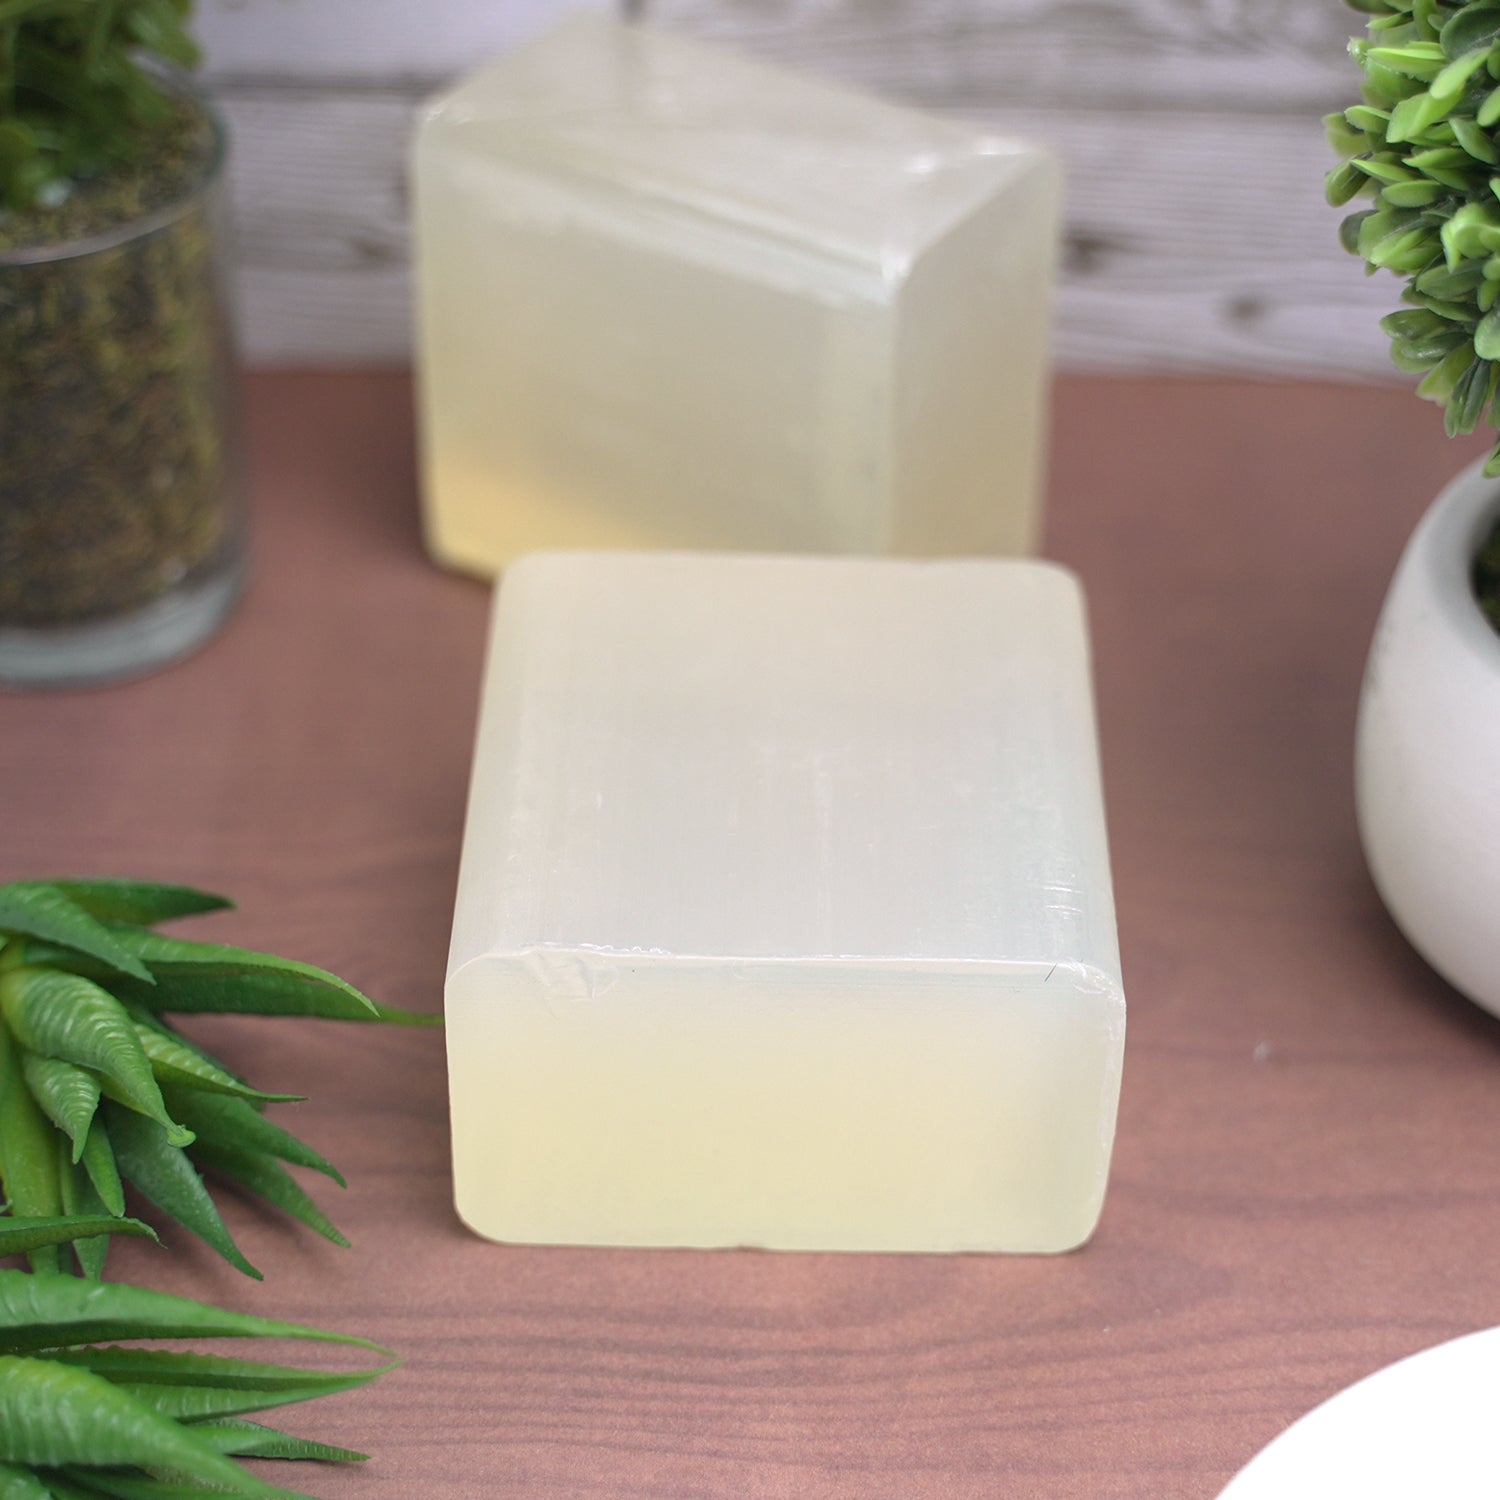 25 Lb Aloe Vera Clear Glycerin Melt & Soap Base Organic Natural 